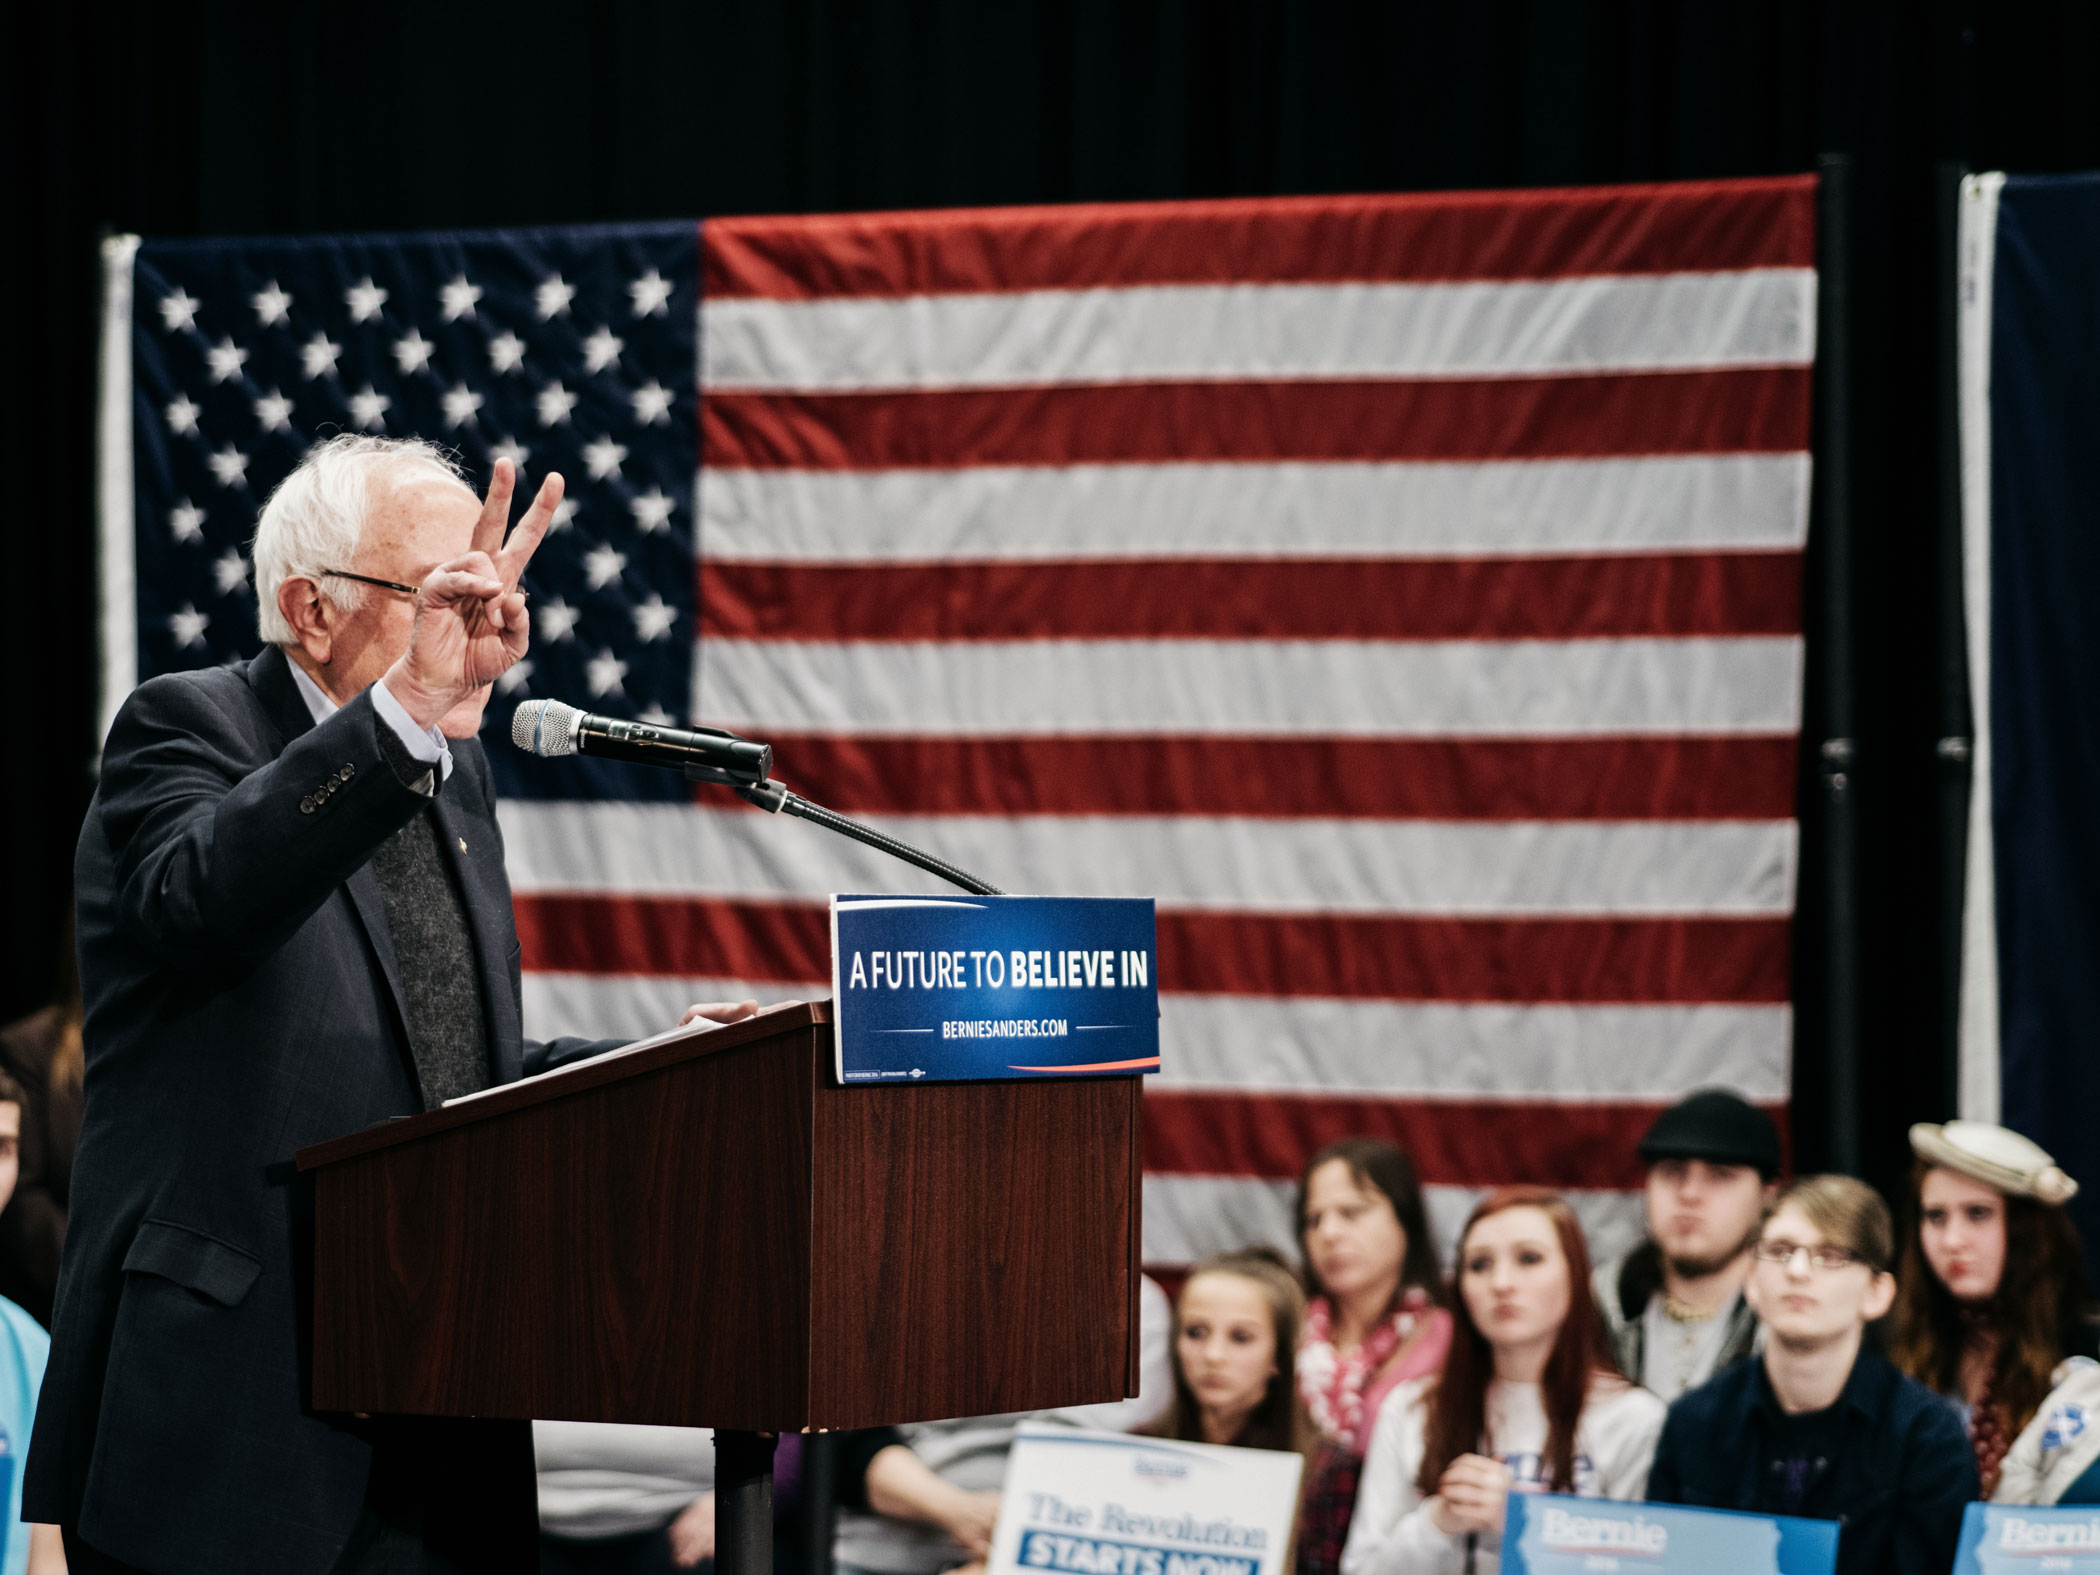 Sen. Bernie Sanders, I-Vt., speaks at a campaign event in Iowa on Jan. 24, 2016.